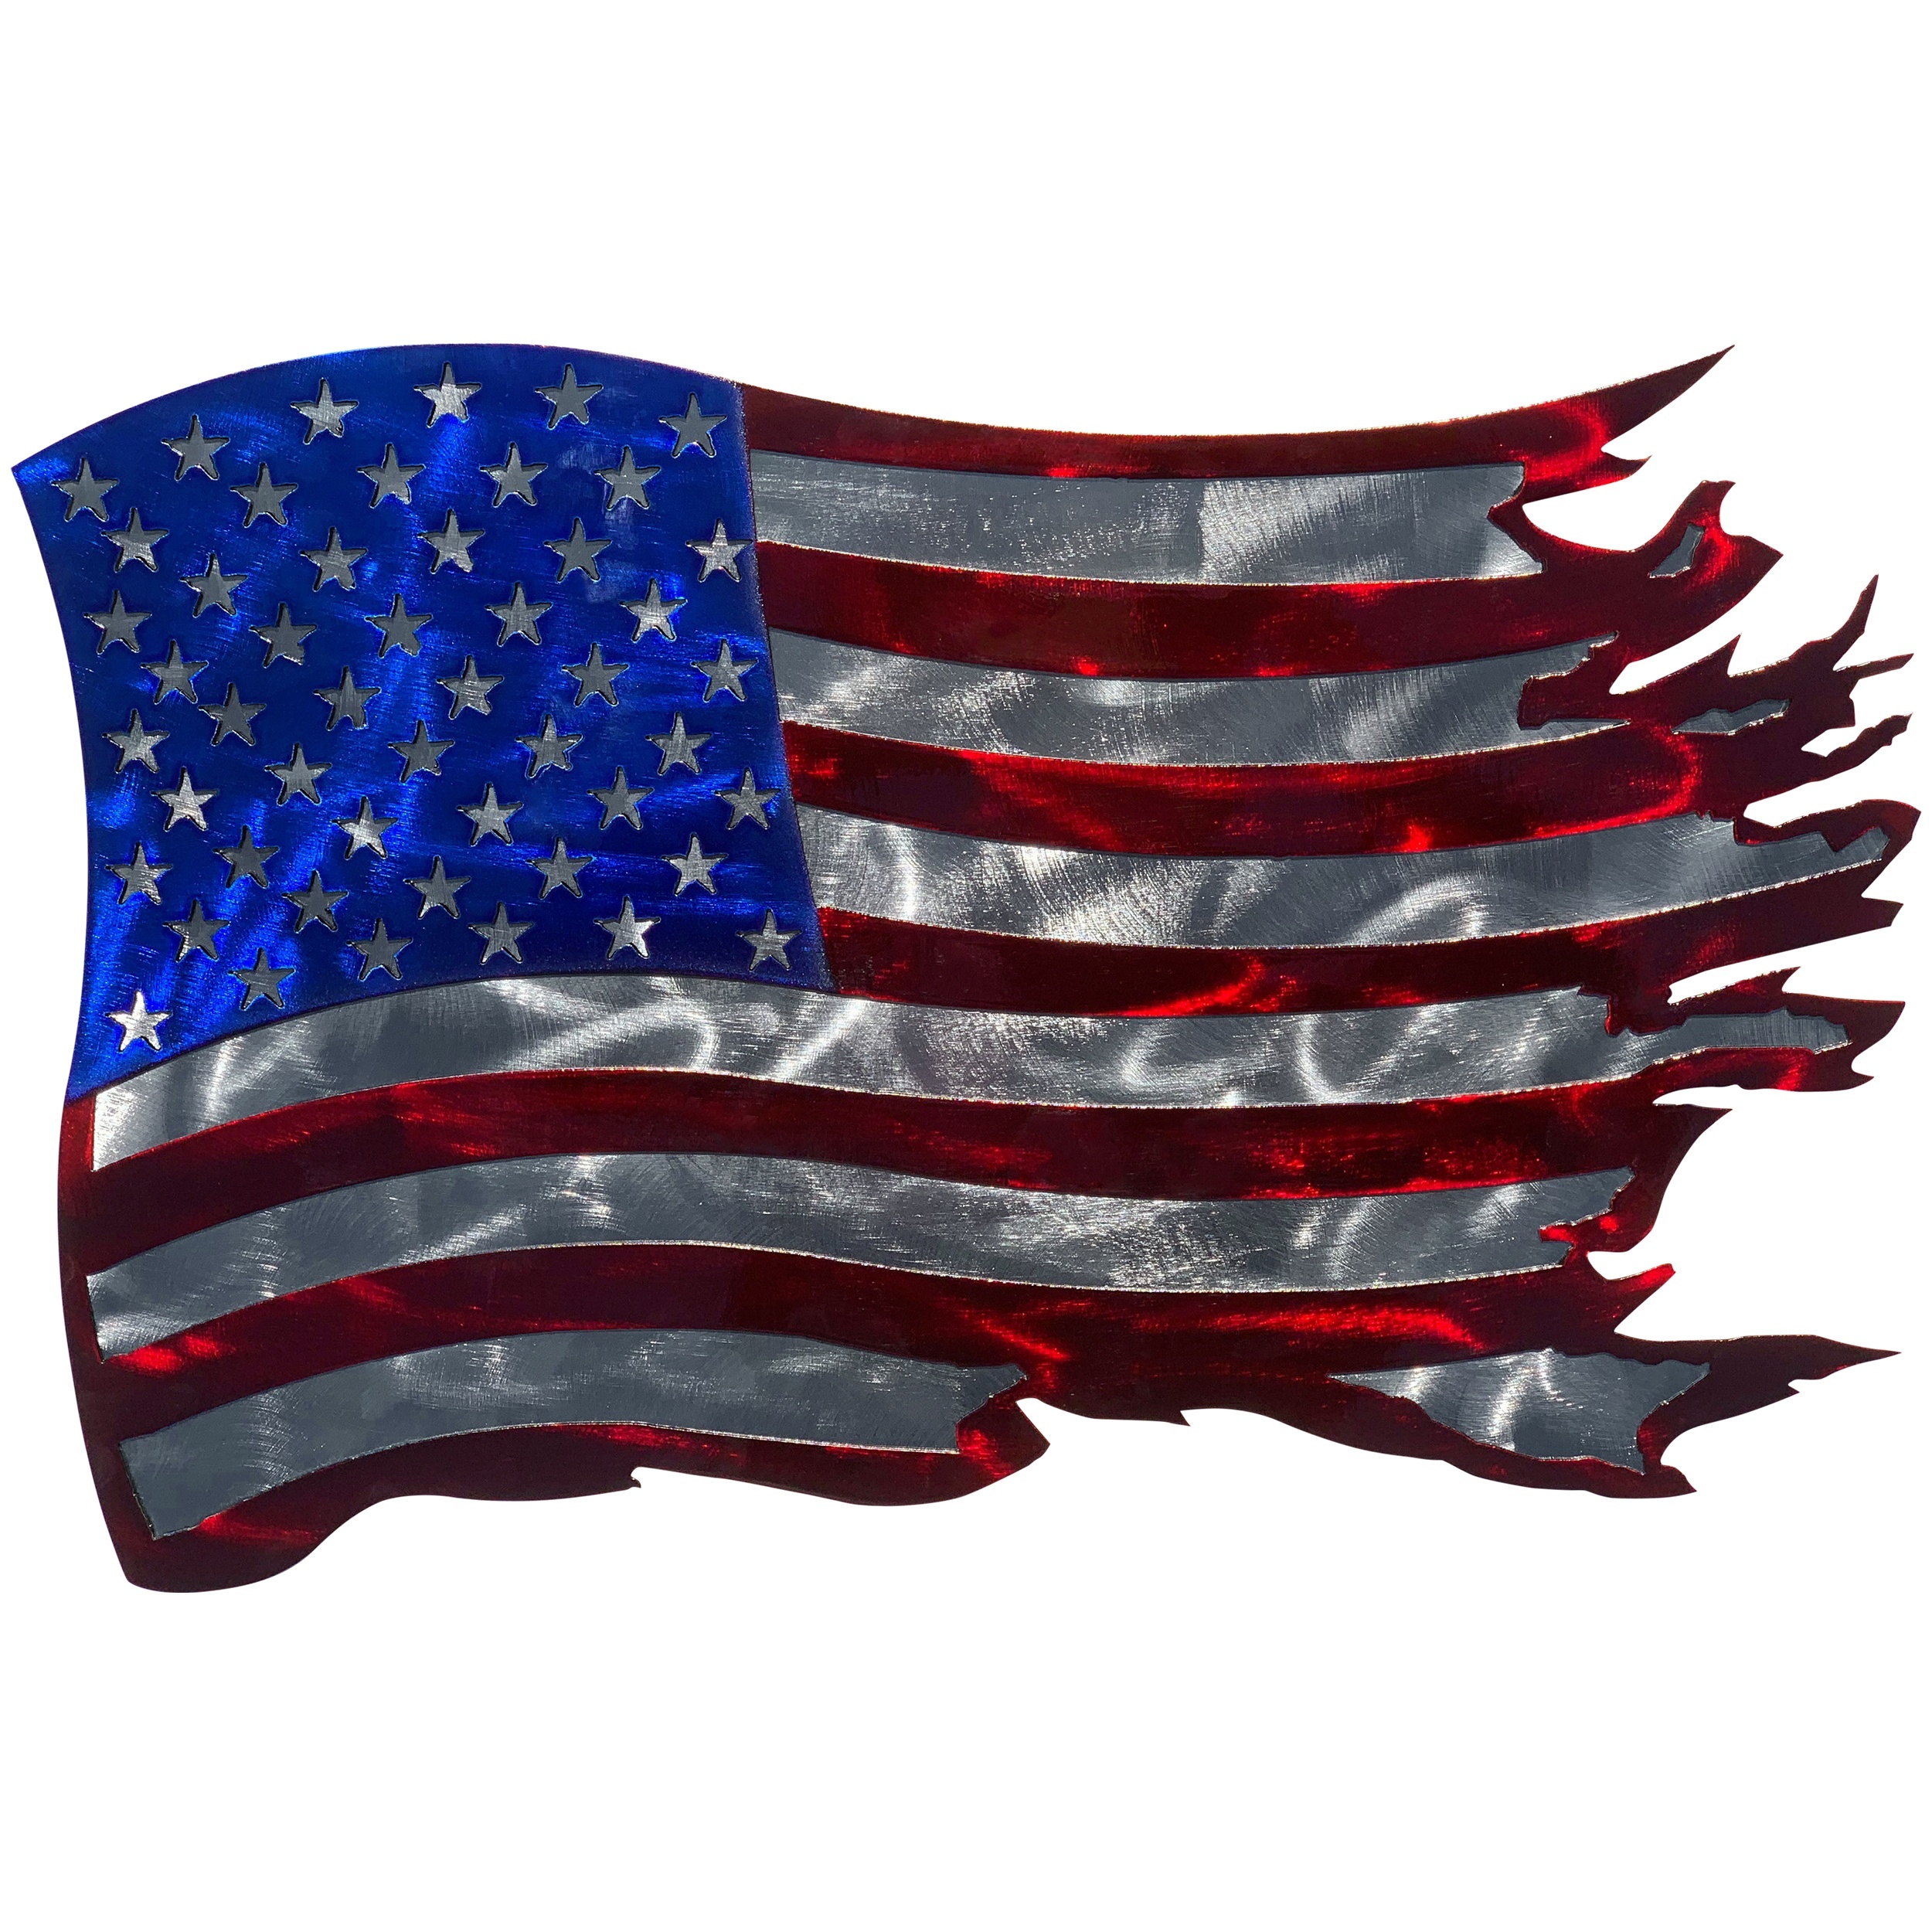 American-flag